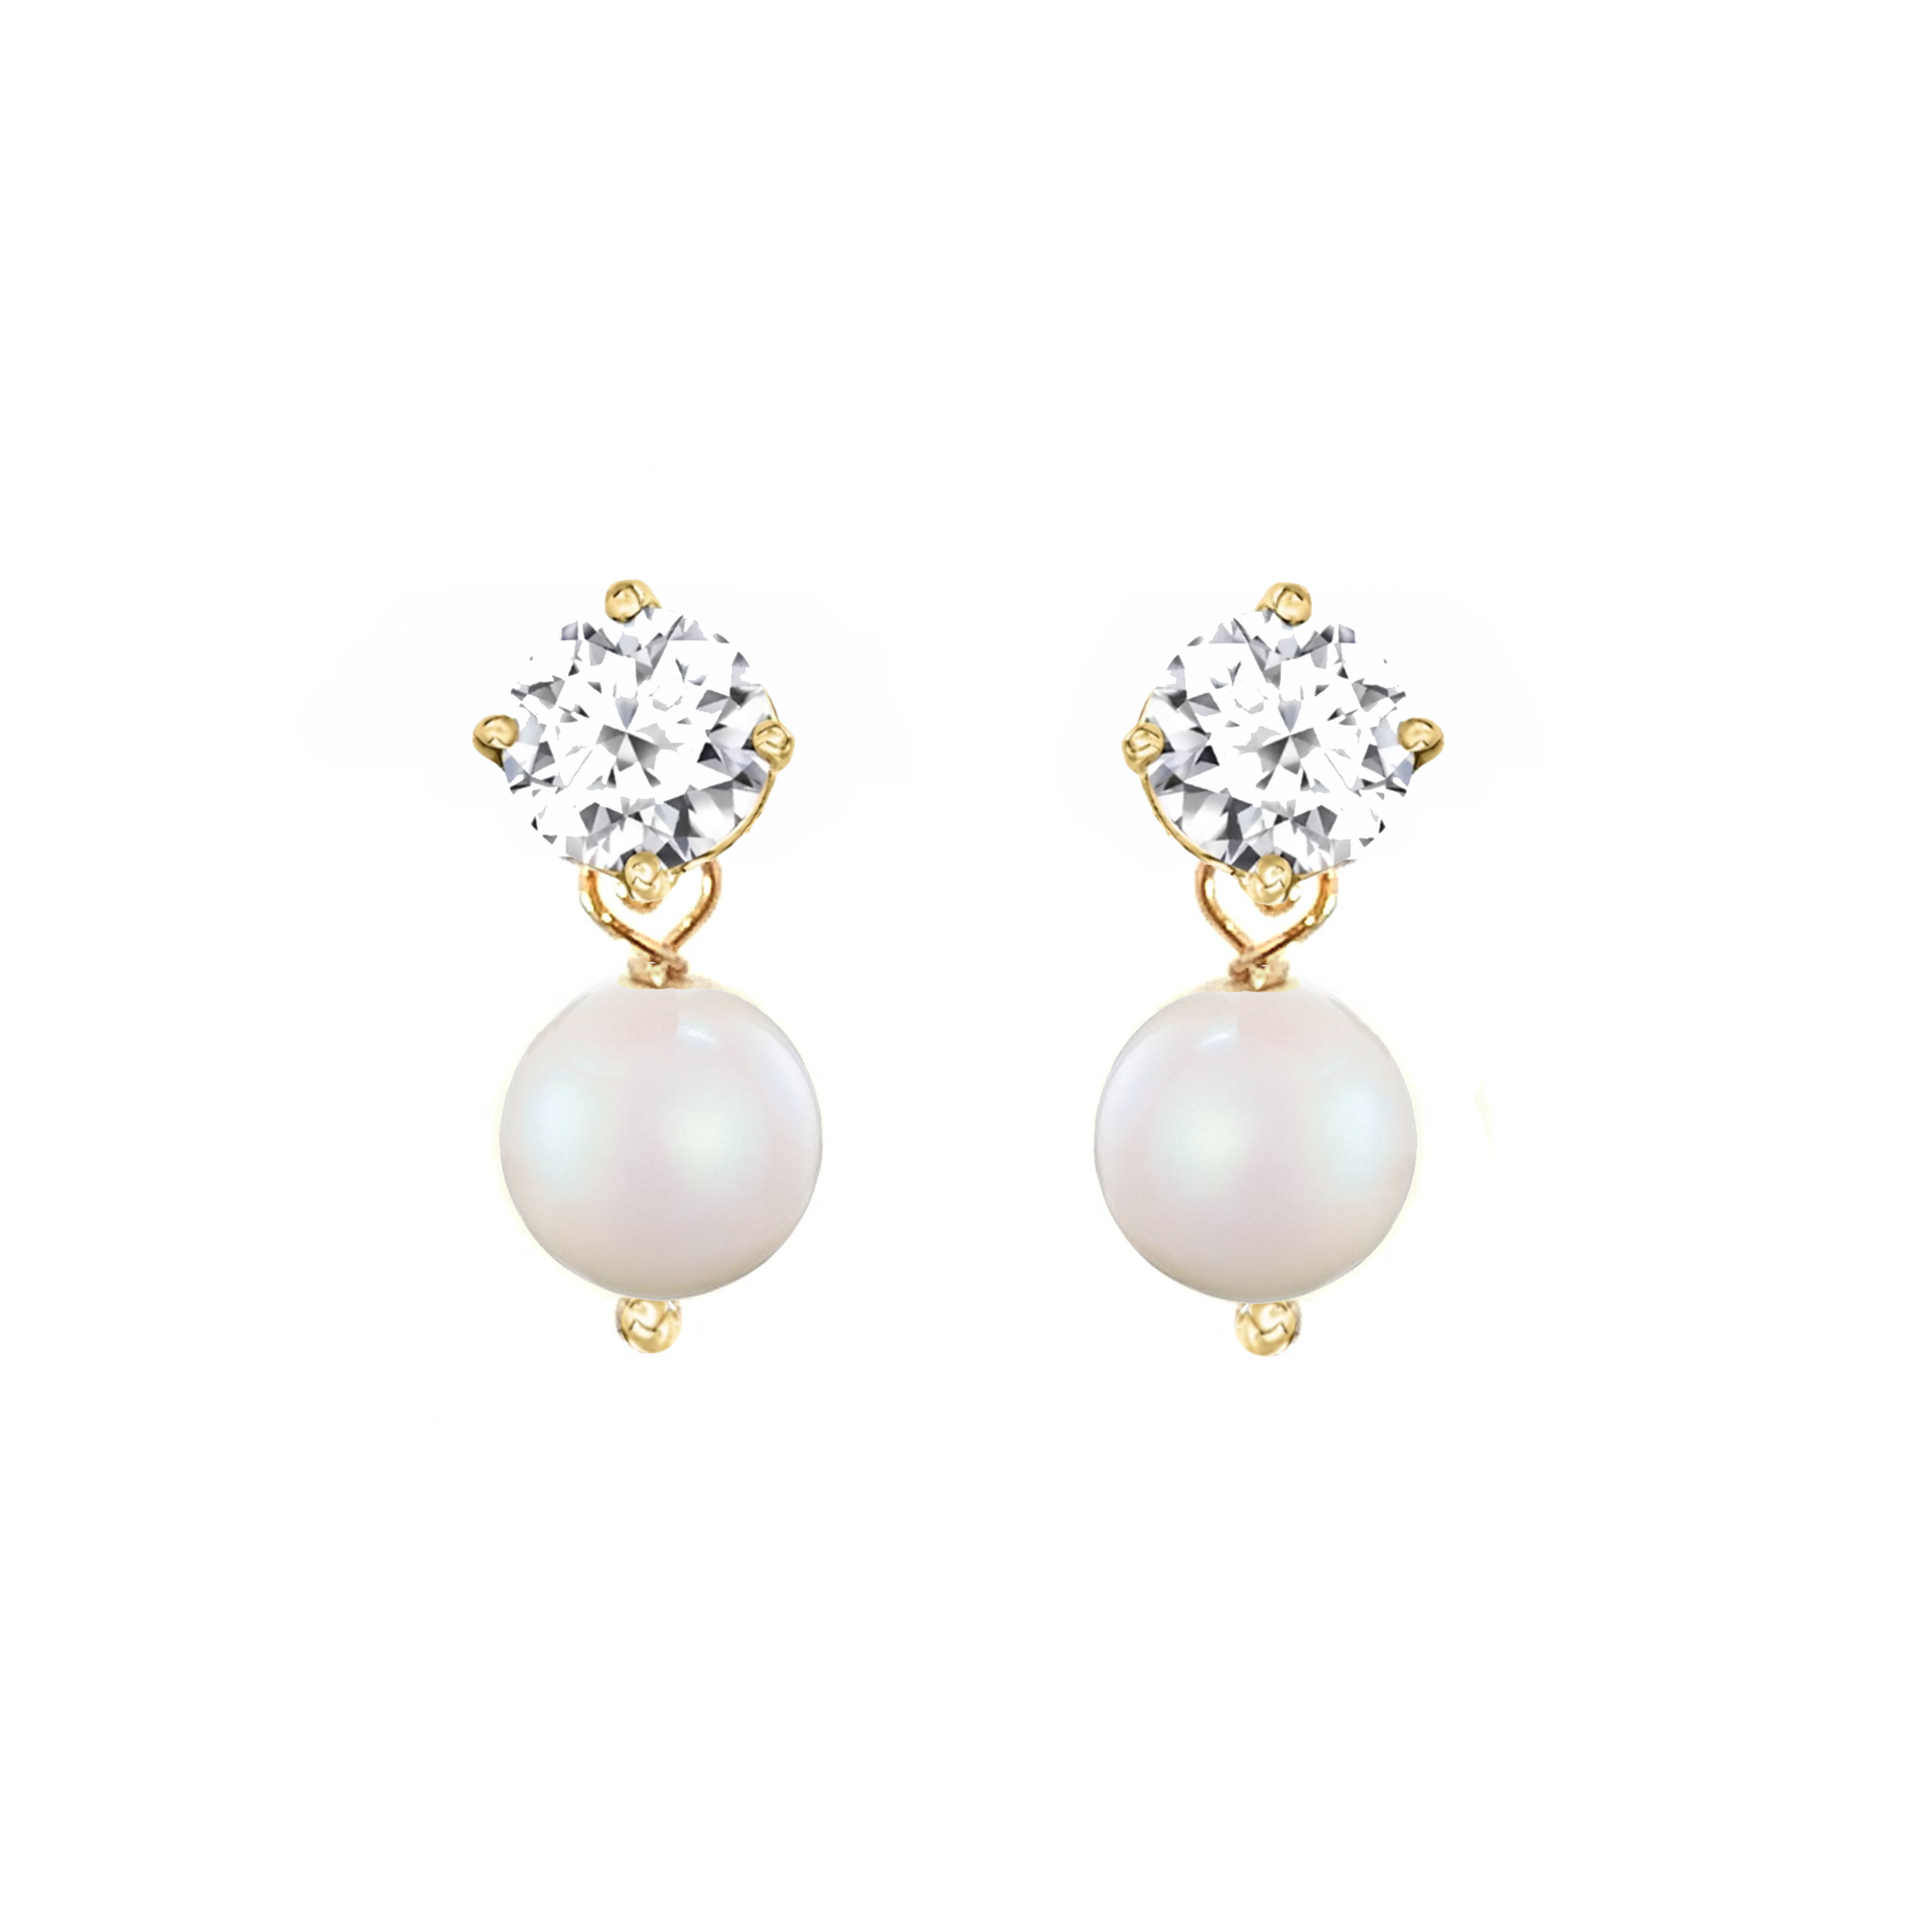 Paris pearl drop earrings gold